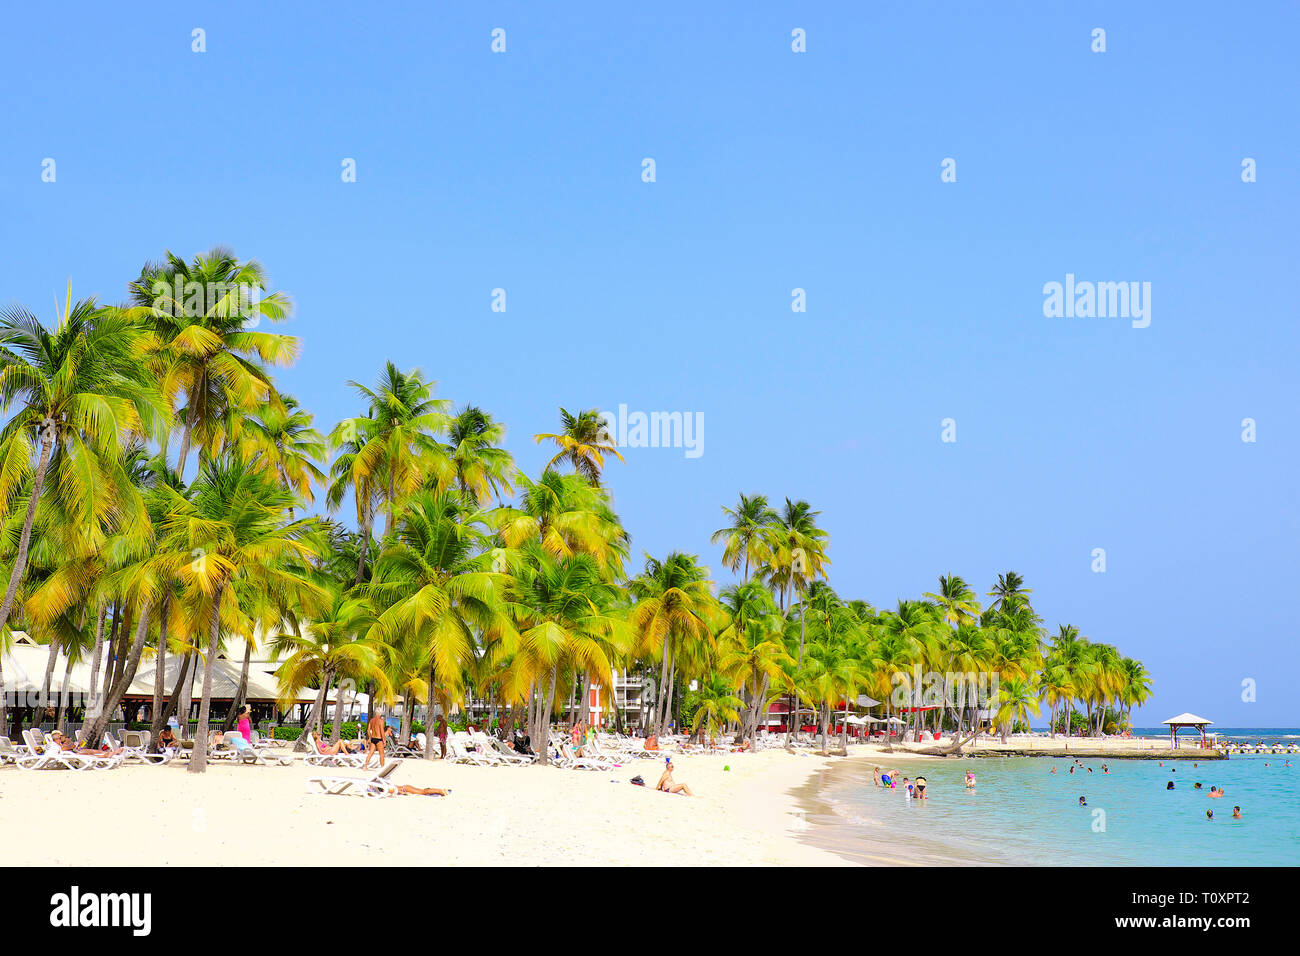 Guadeloupe: Palmen am Strand "Plage de la Caravelle", der Strand vom Club Med Urlaub Dorf Stockfoto